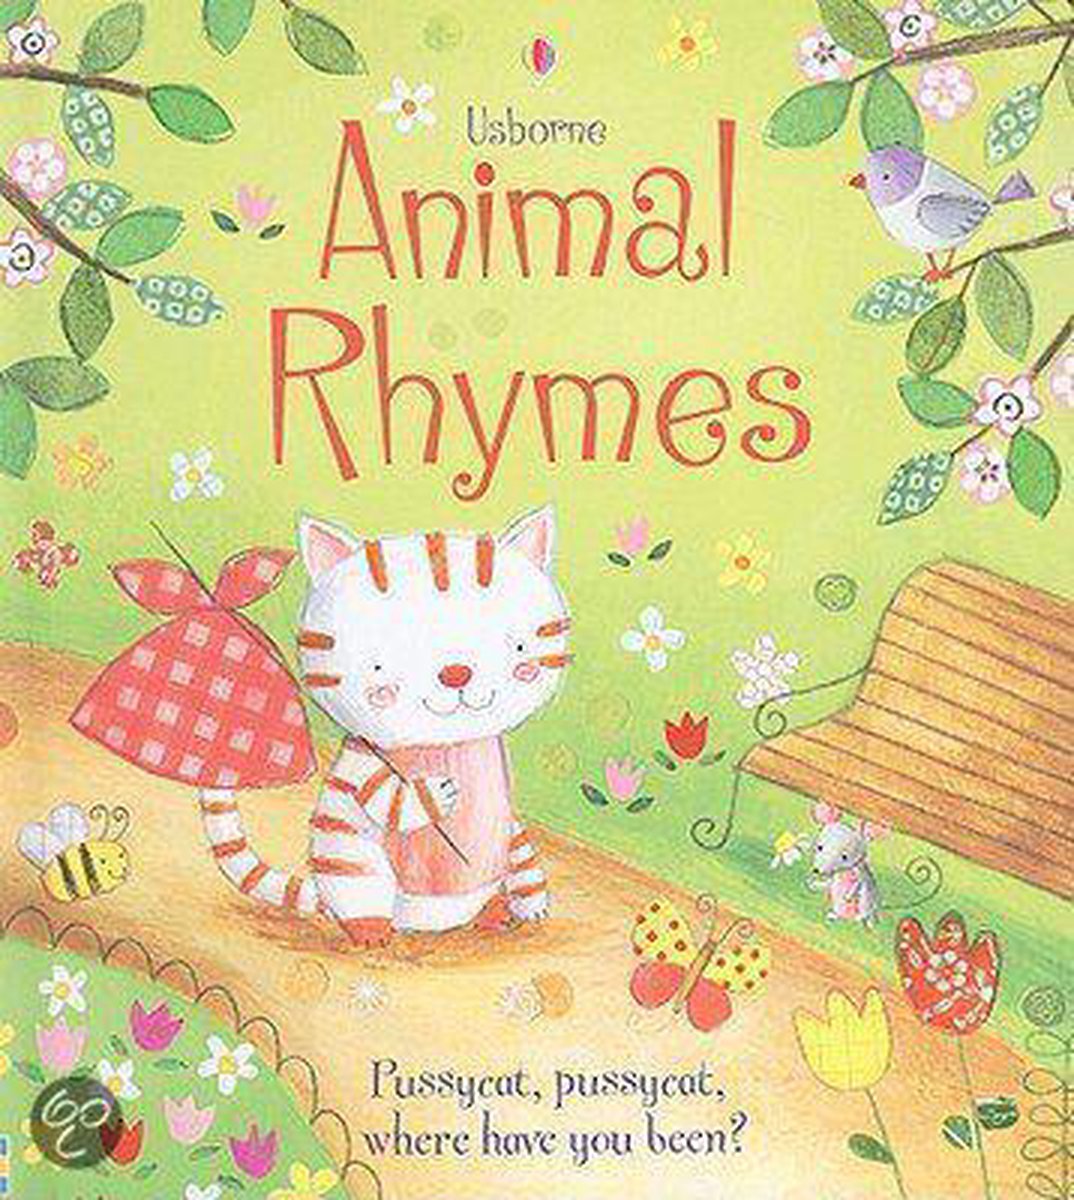 Animal nursery rhymes. Animals Rhyme.